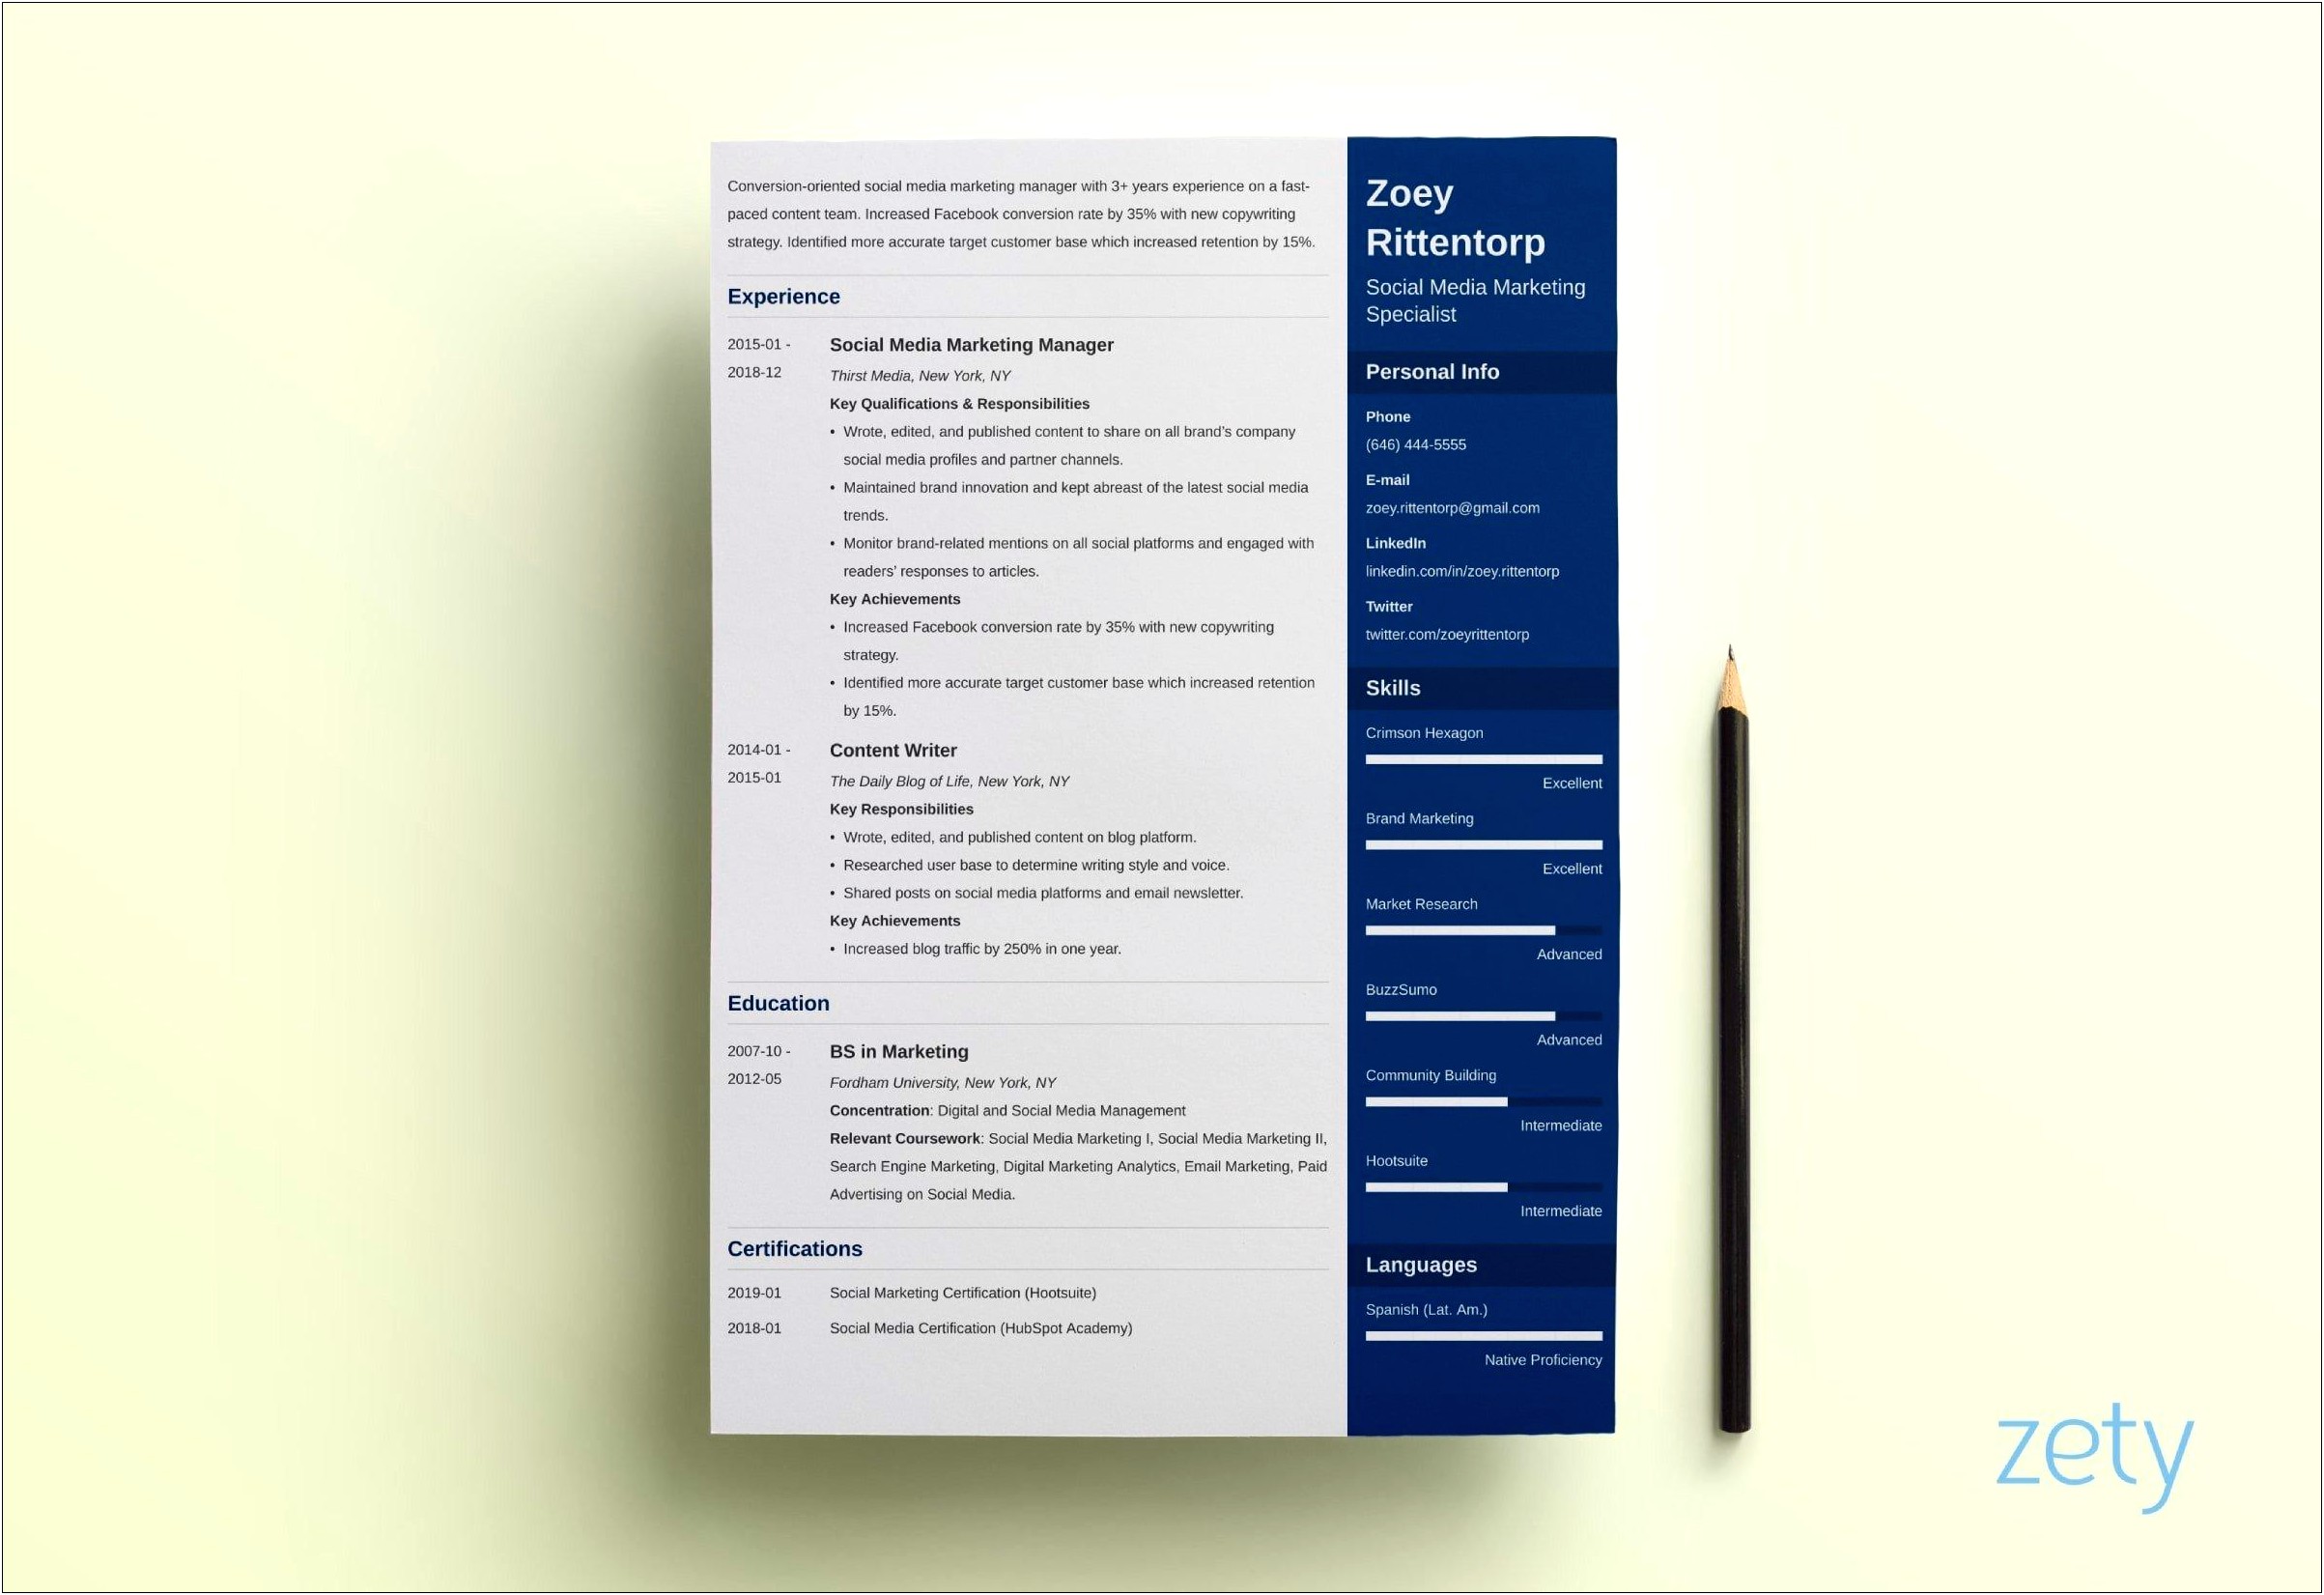 Simple Resume Format Download In Ms Word 2007